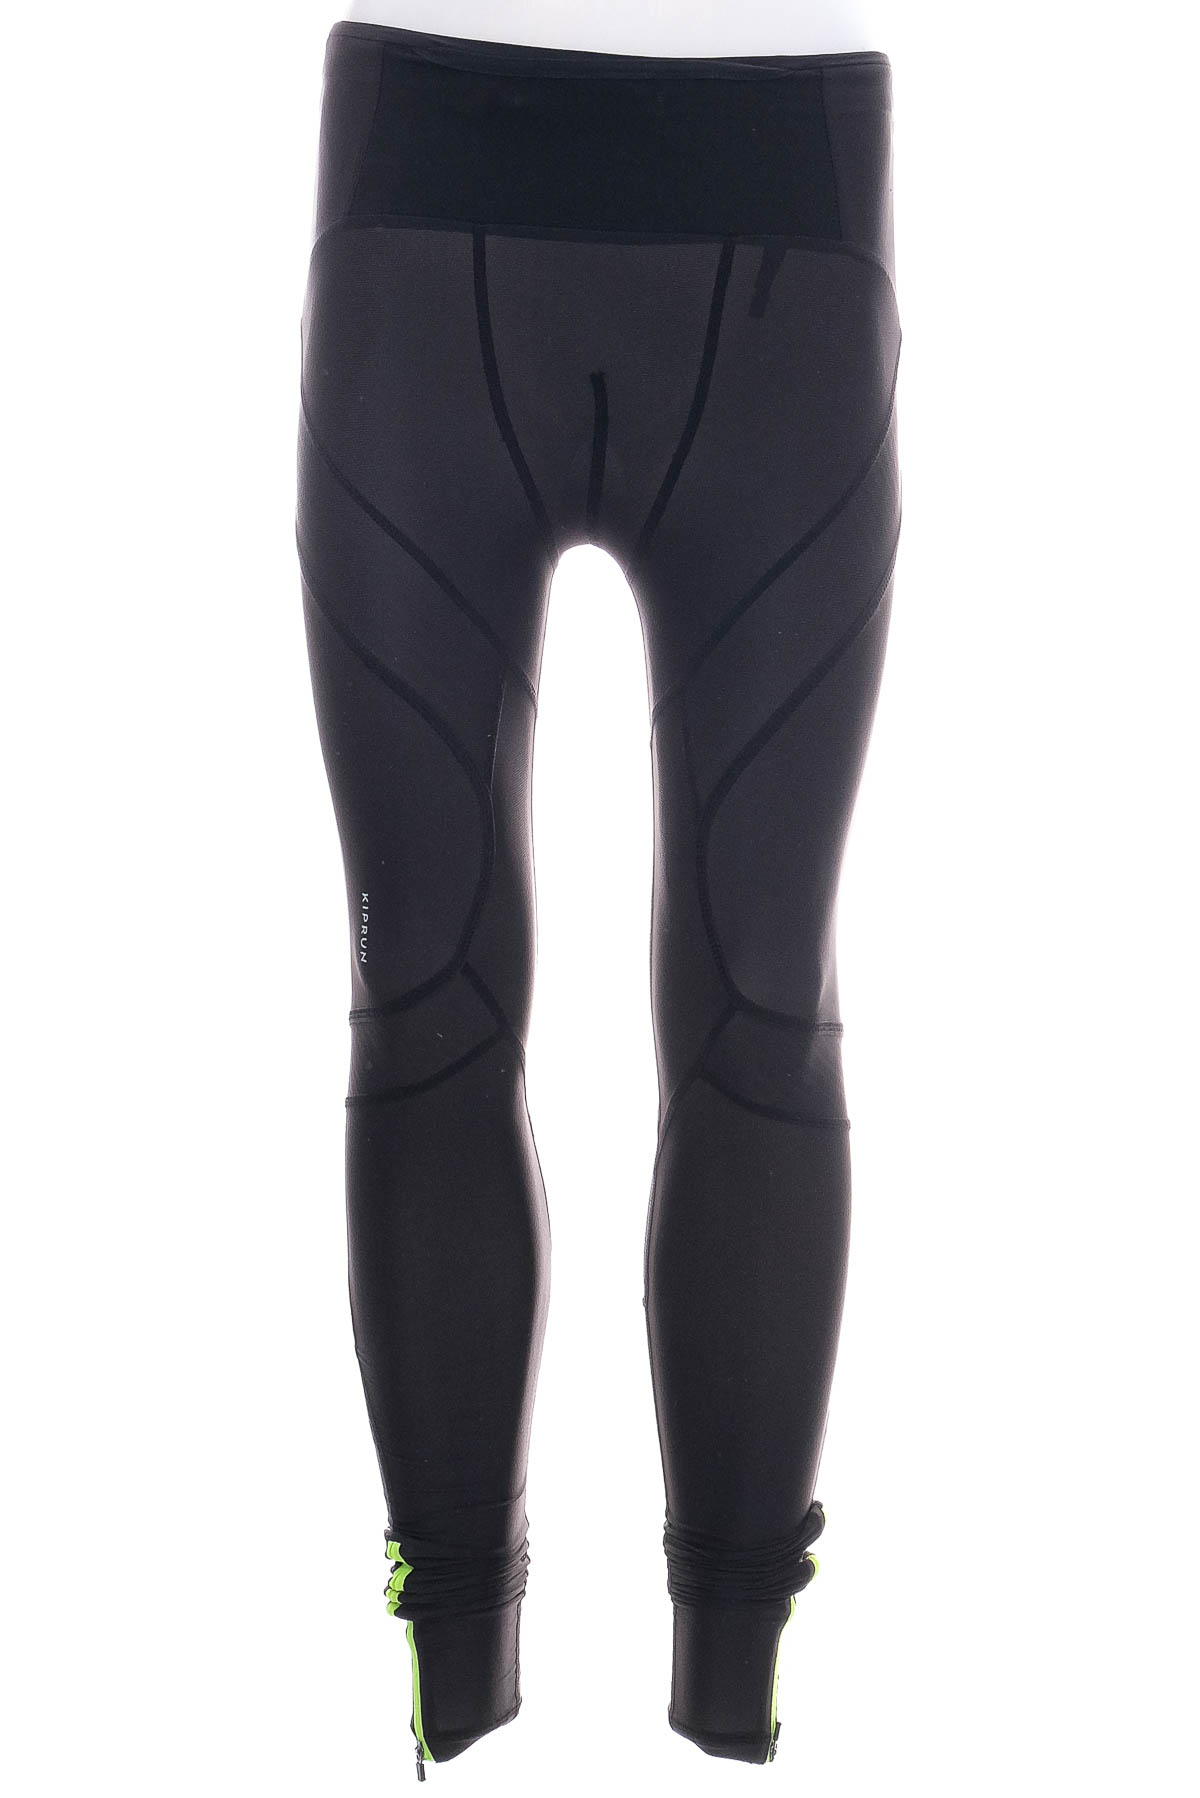 Male's leggings - DECATHLON - 0